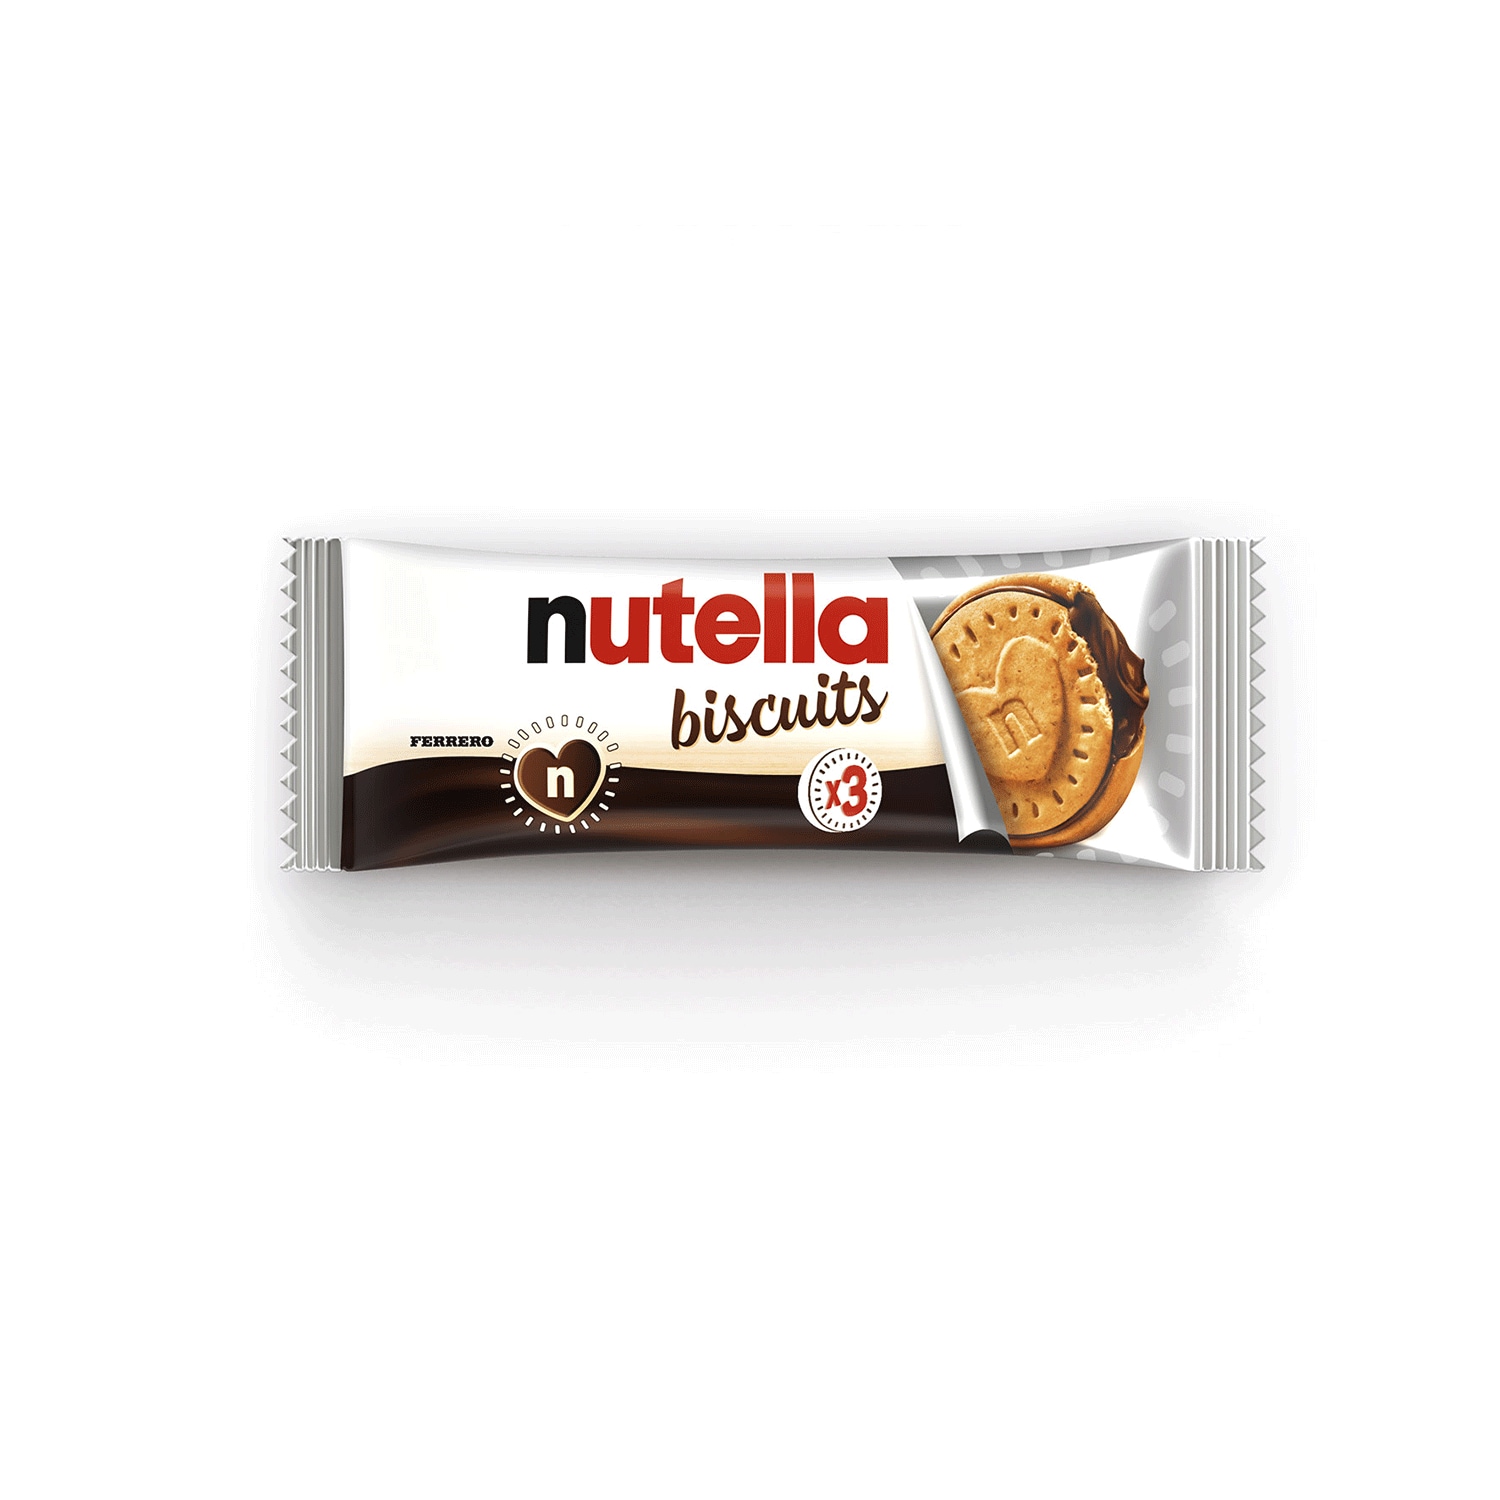 Nutella biscuits - Break